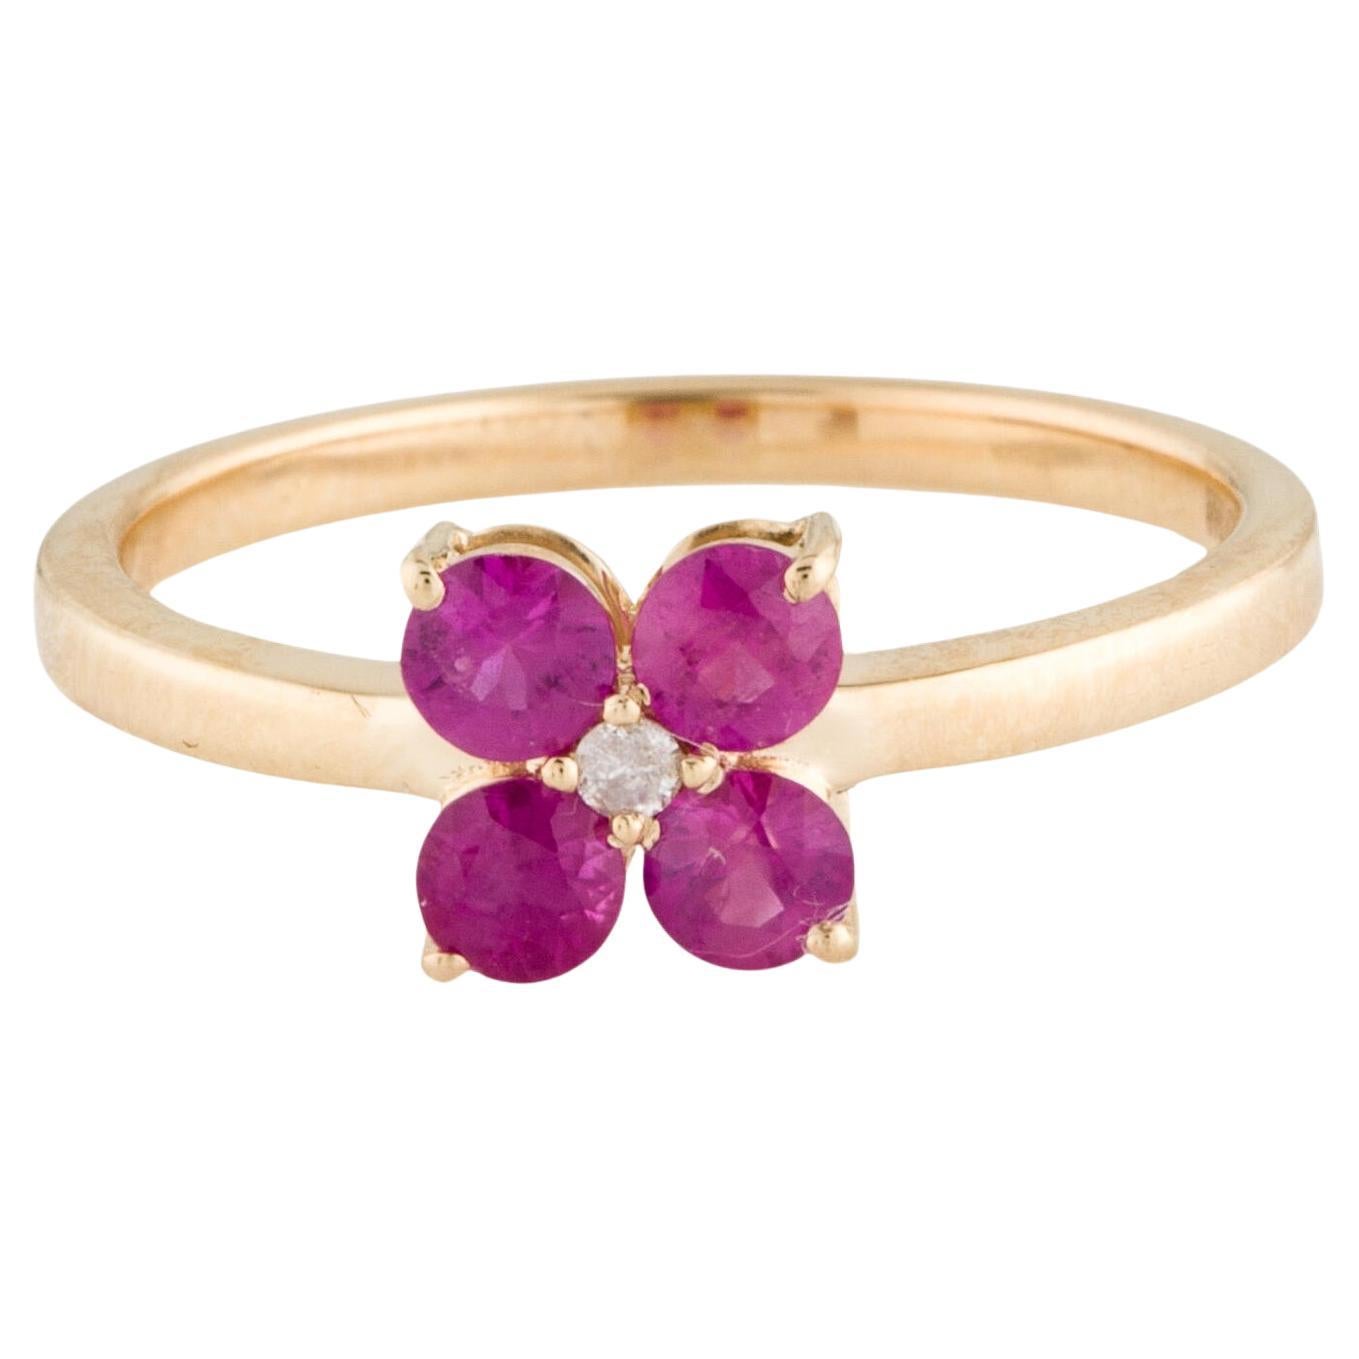 Luxurious 14K Ruby & Diamond Cocktail Ring Size 6.75 - Elegant Statement Jewelry